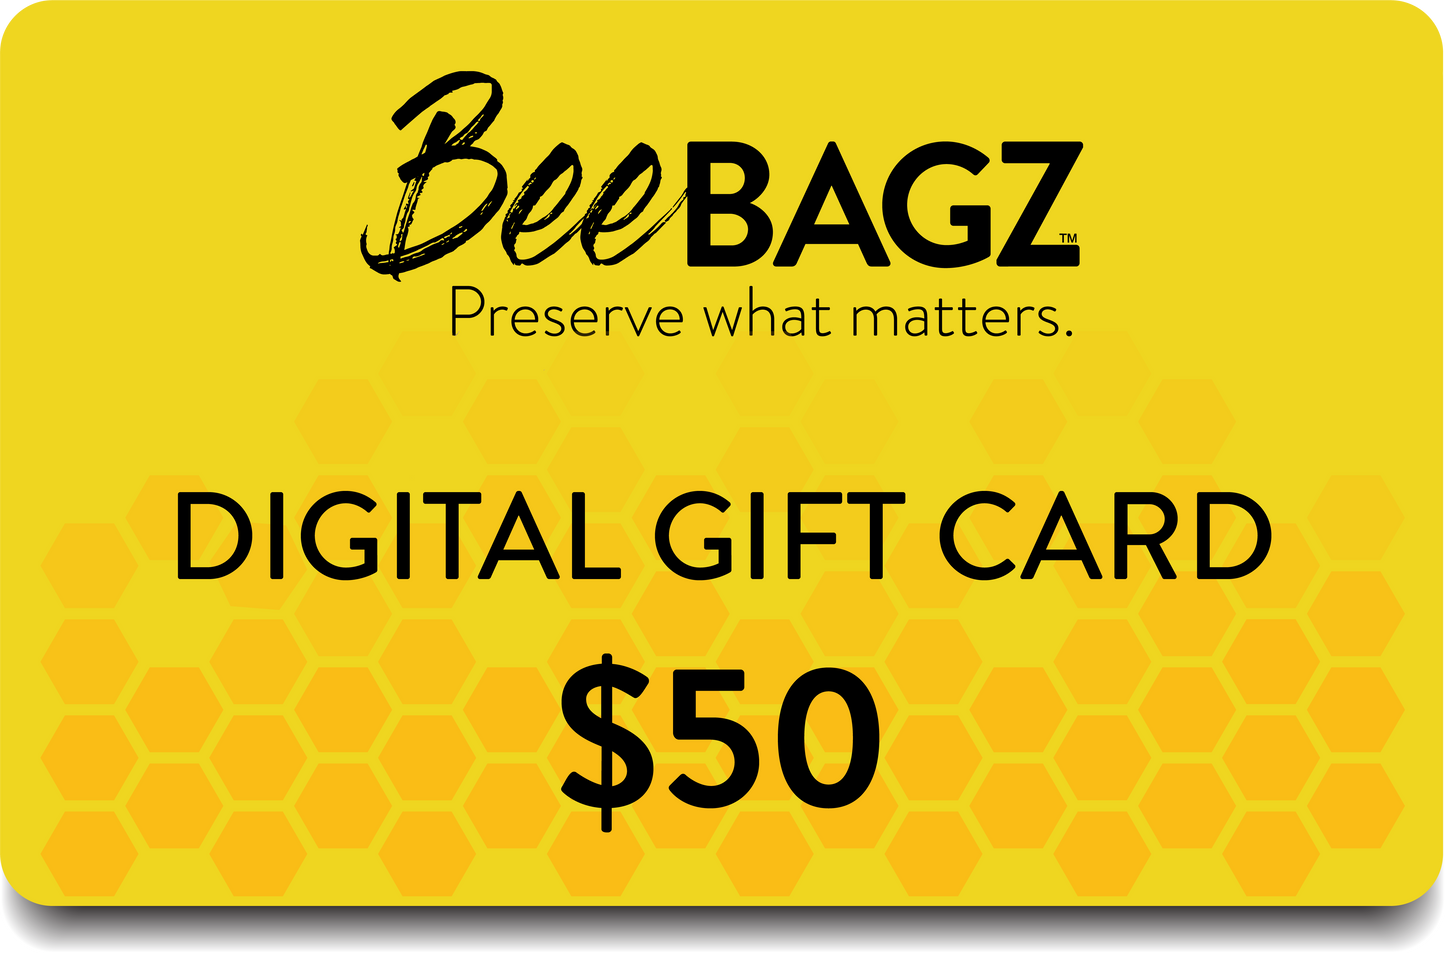 The BeeBAGZ™ Gift Card